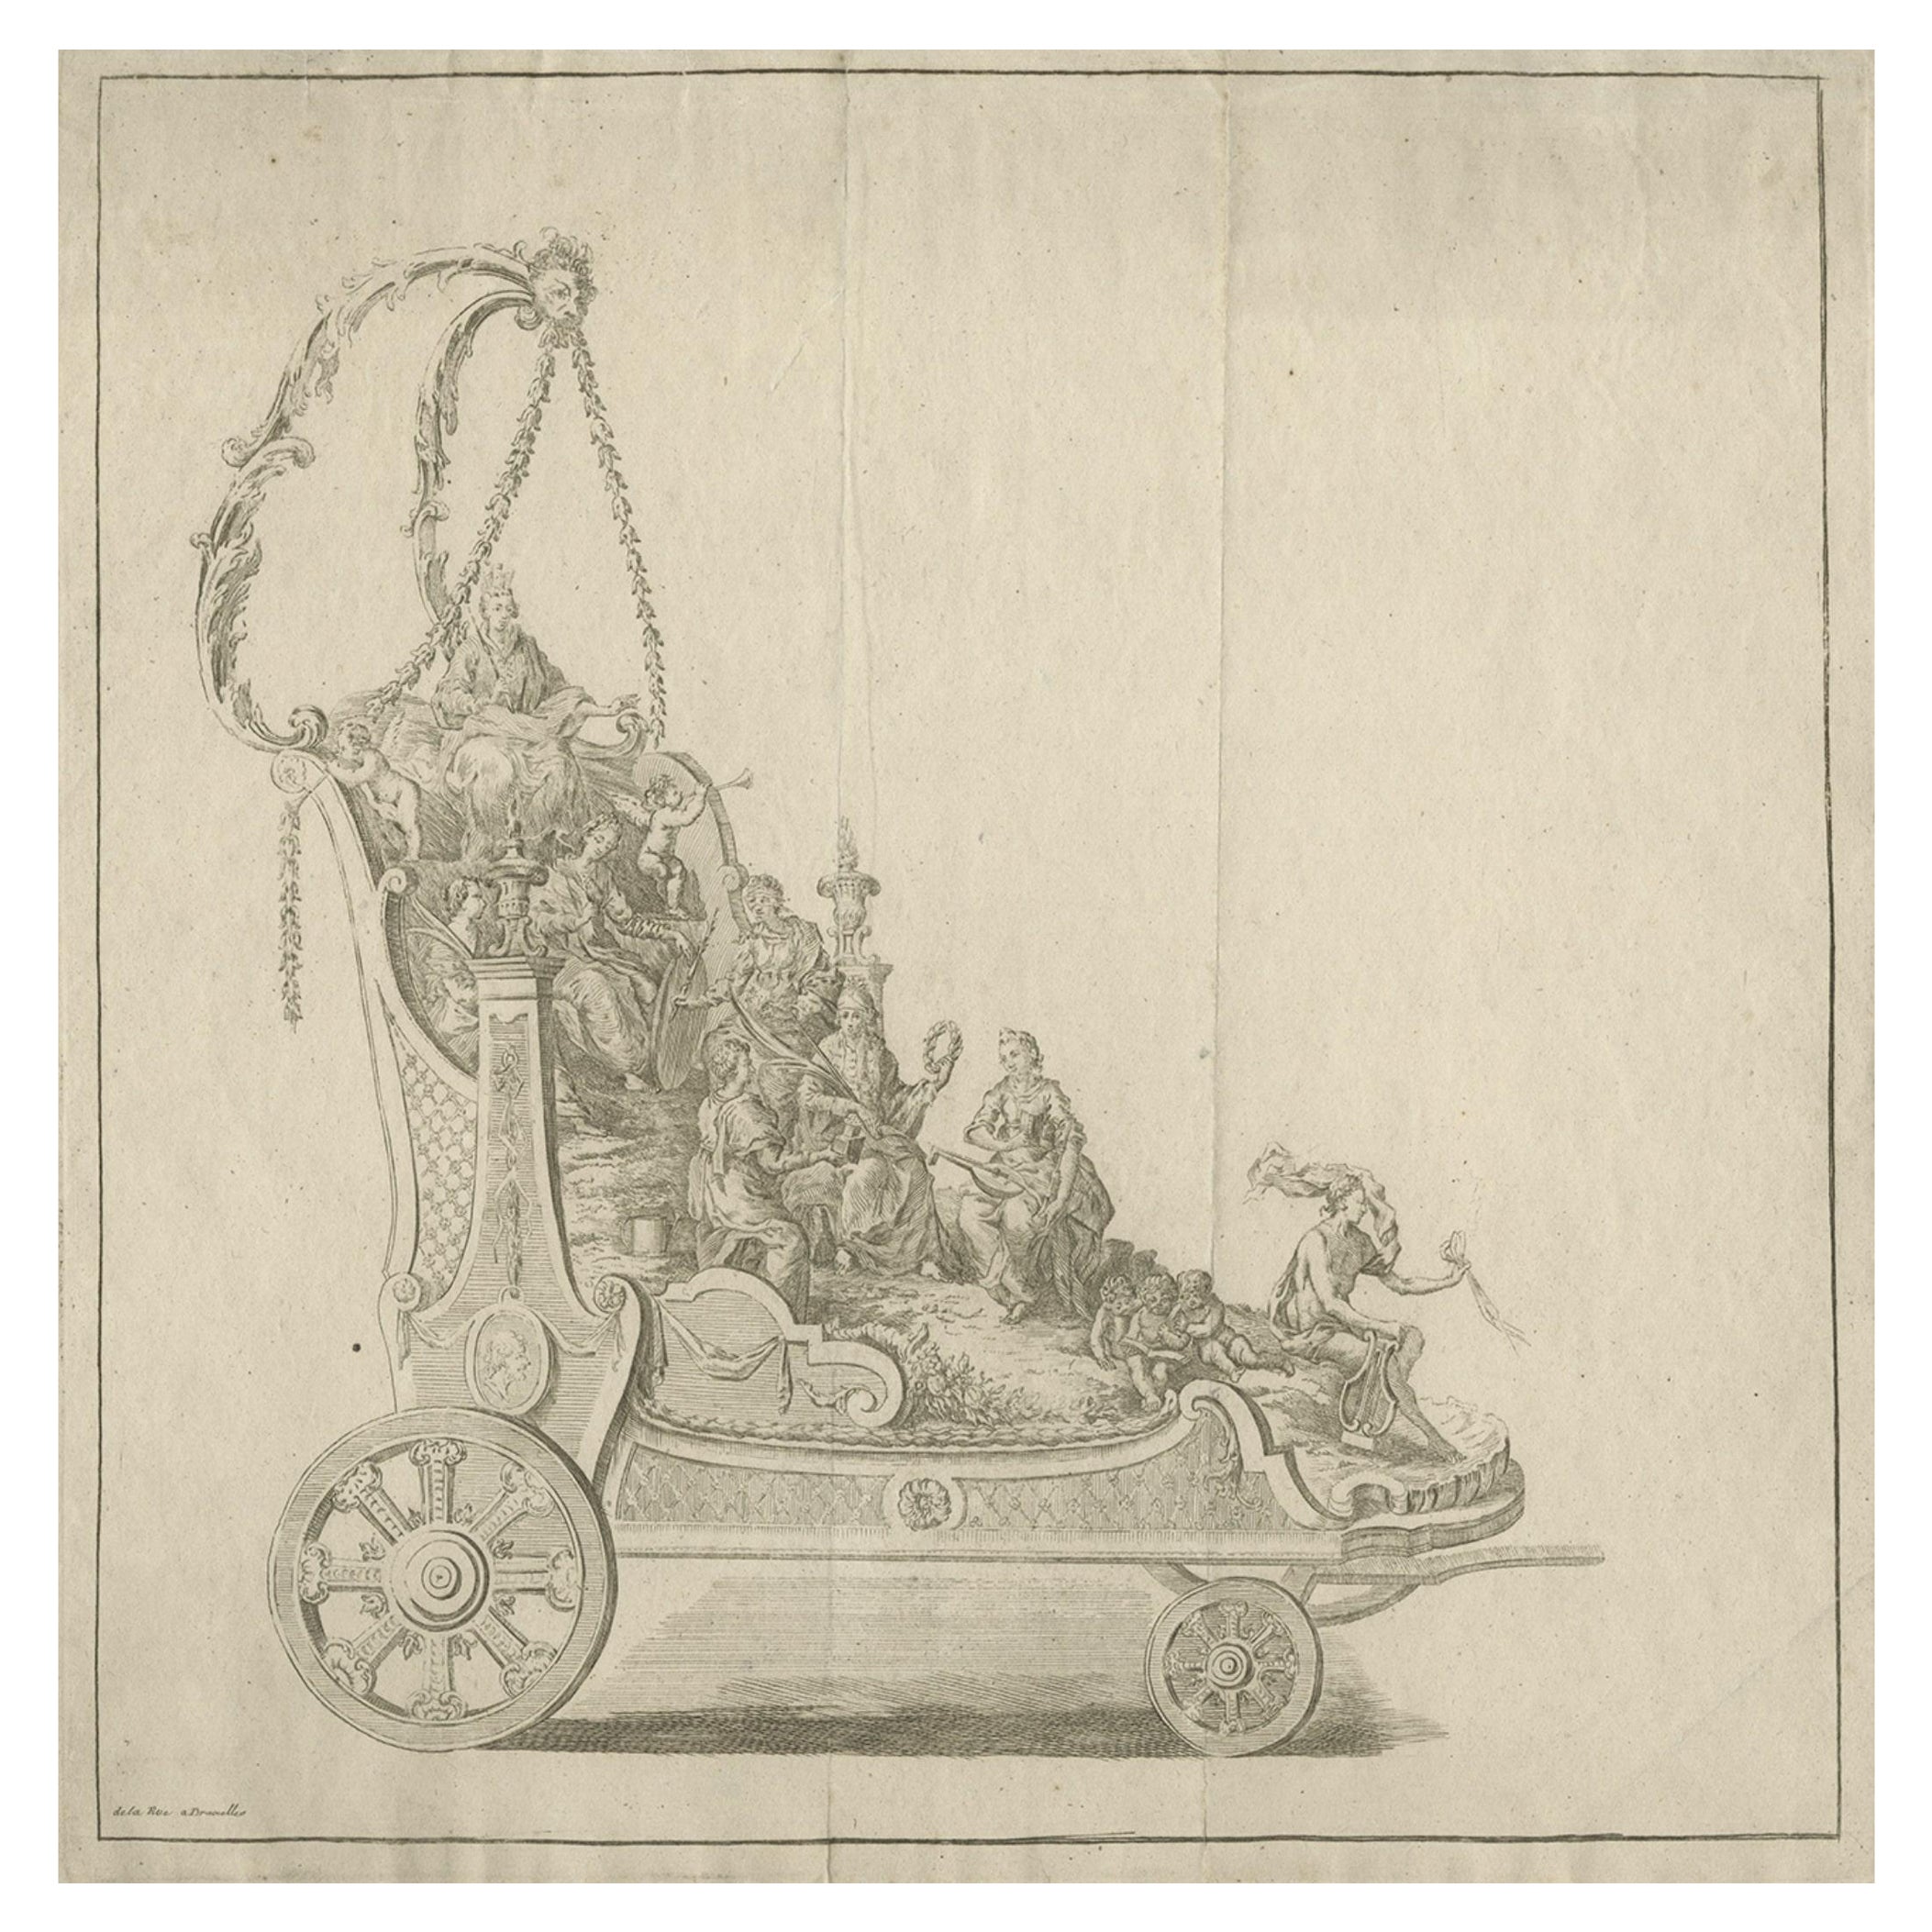 Antique Engraving of a Religious Float for Saint Rumoldus or Rumbold, 1775